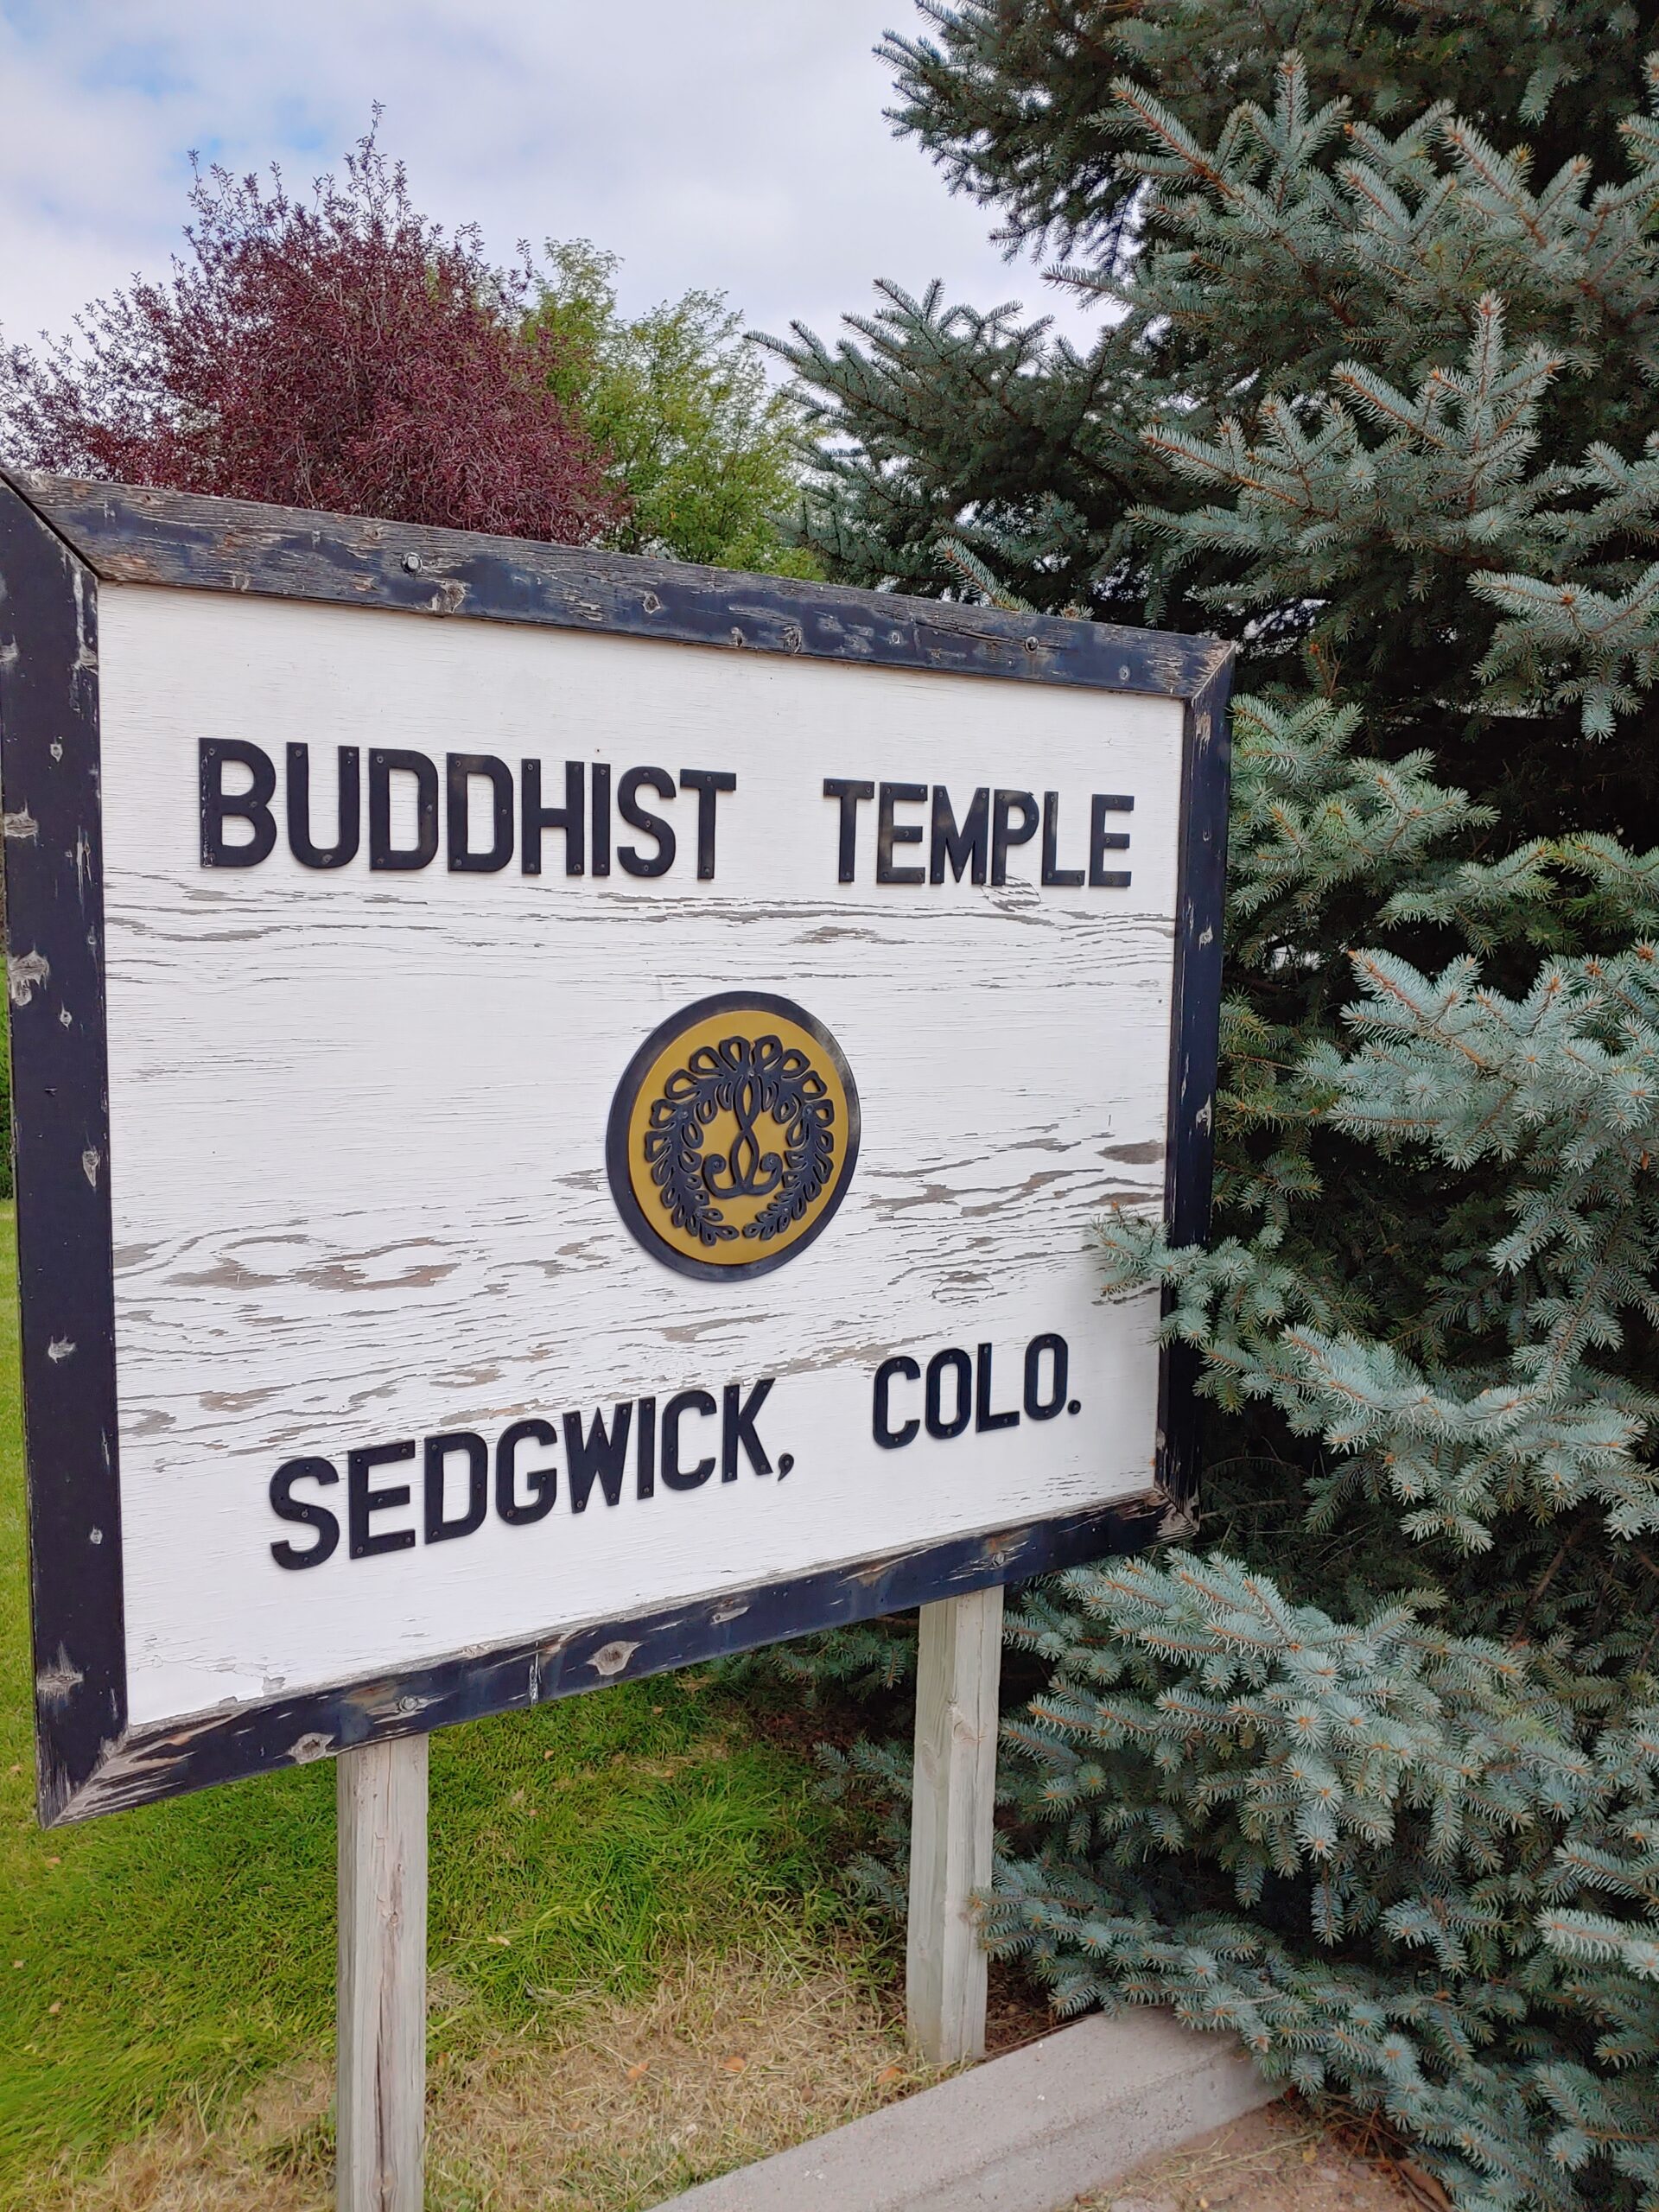 The Sedgwick Buddhist Temple